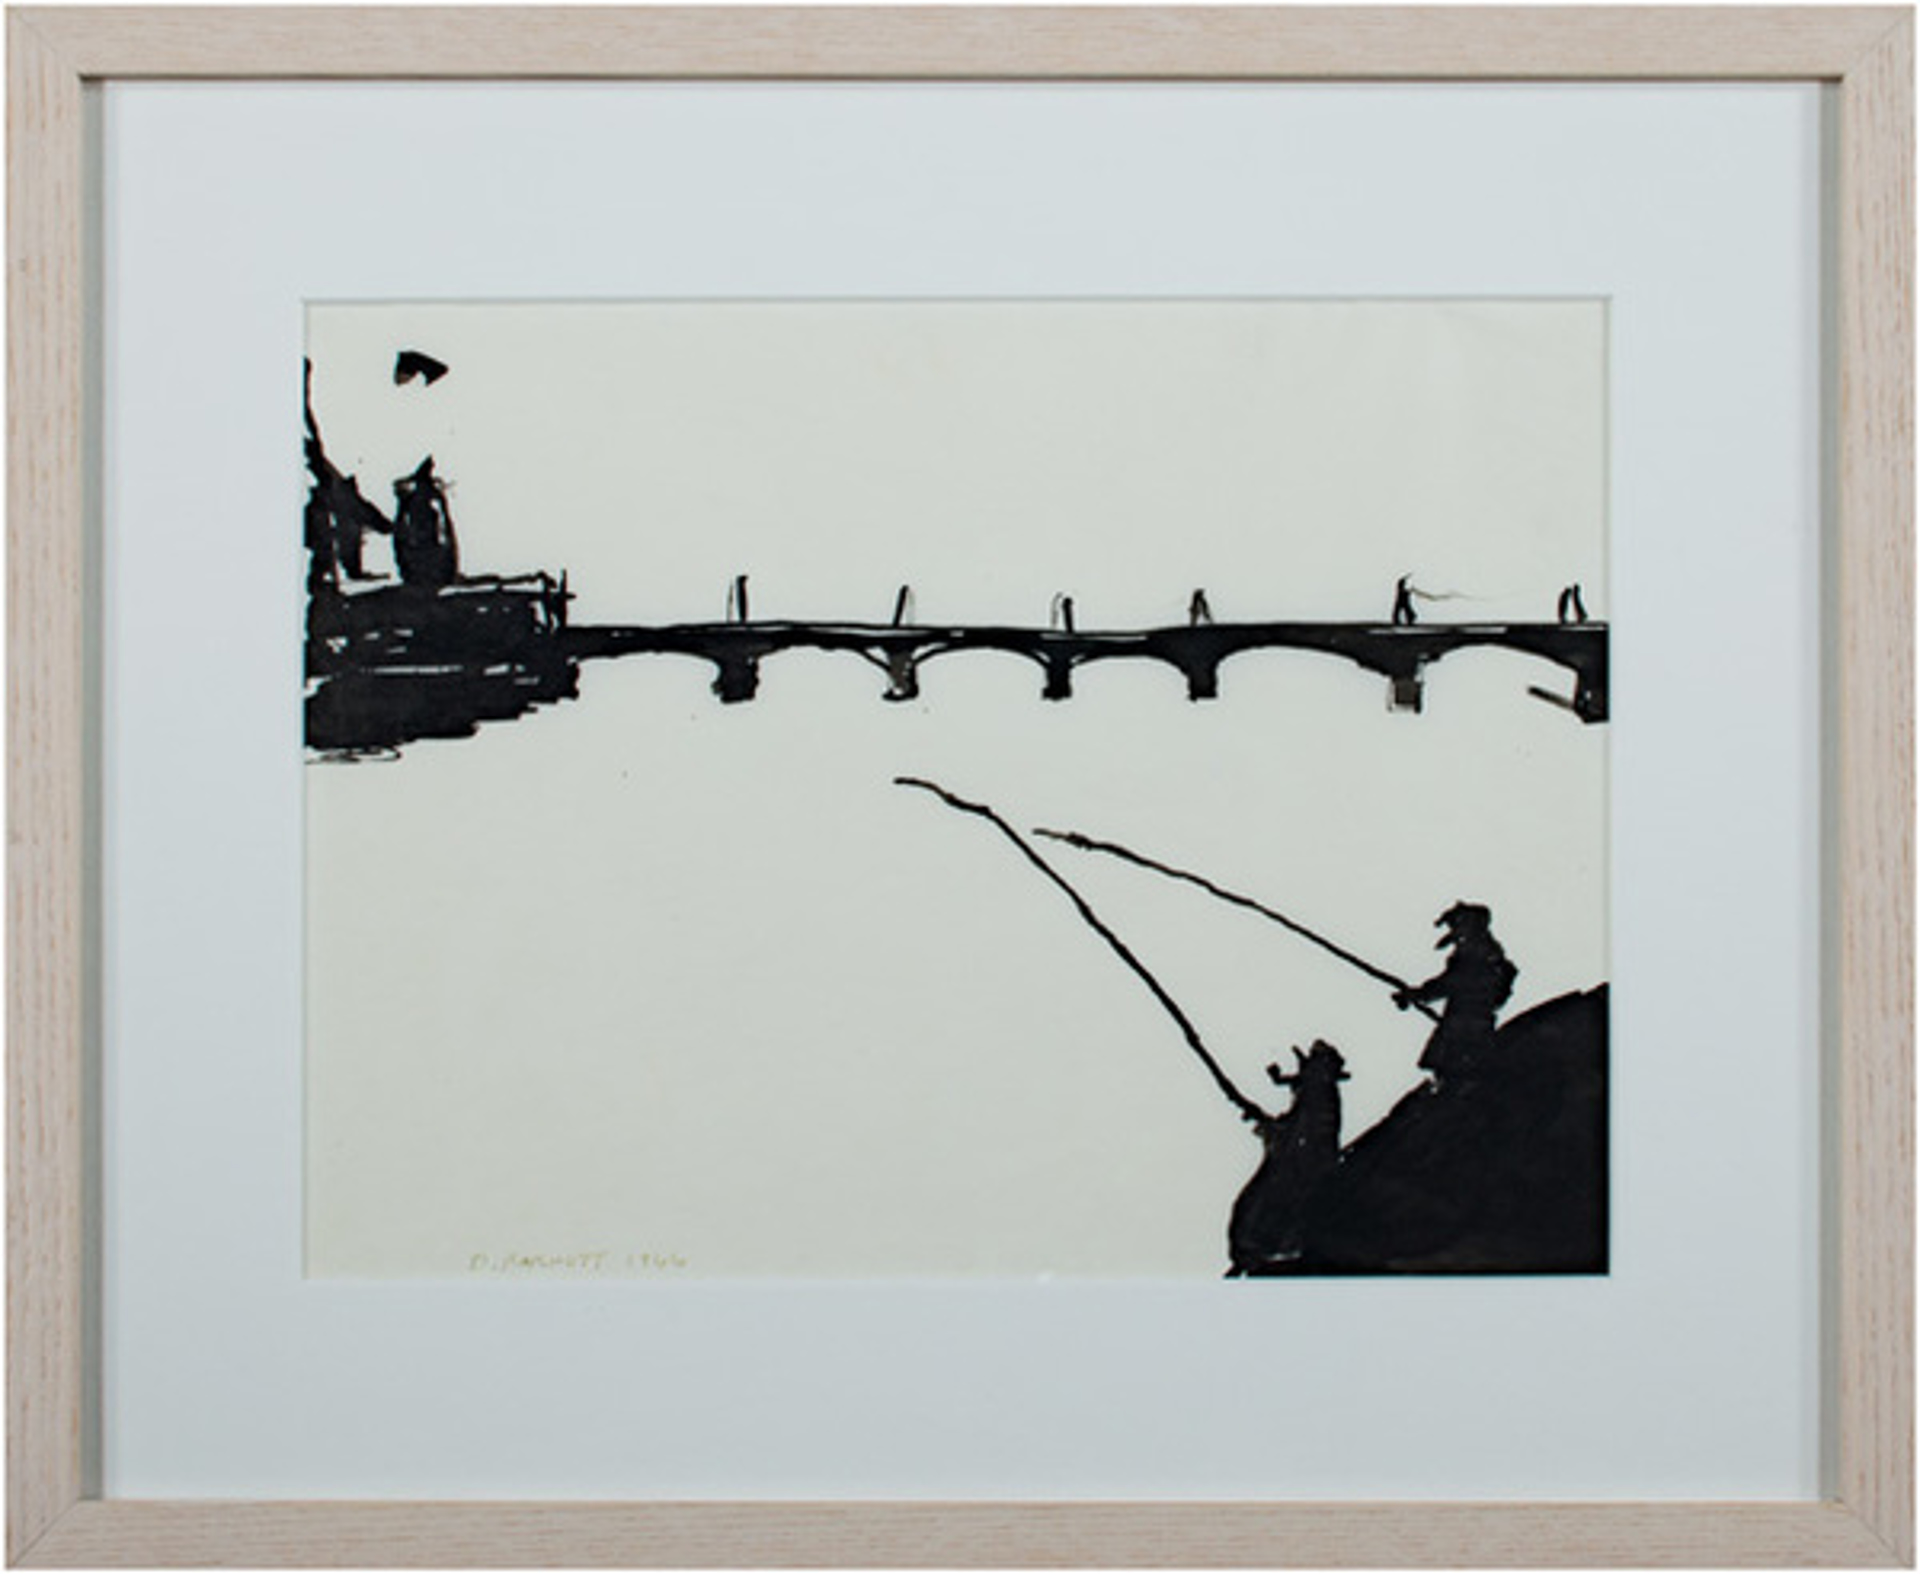 Fishing in Amsterdam by David Barnett